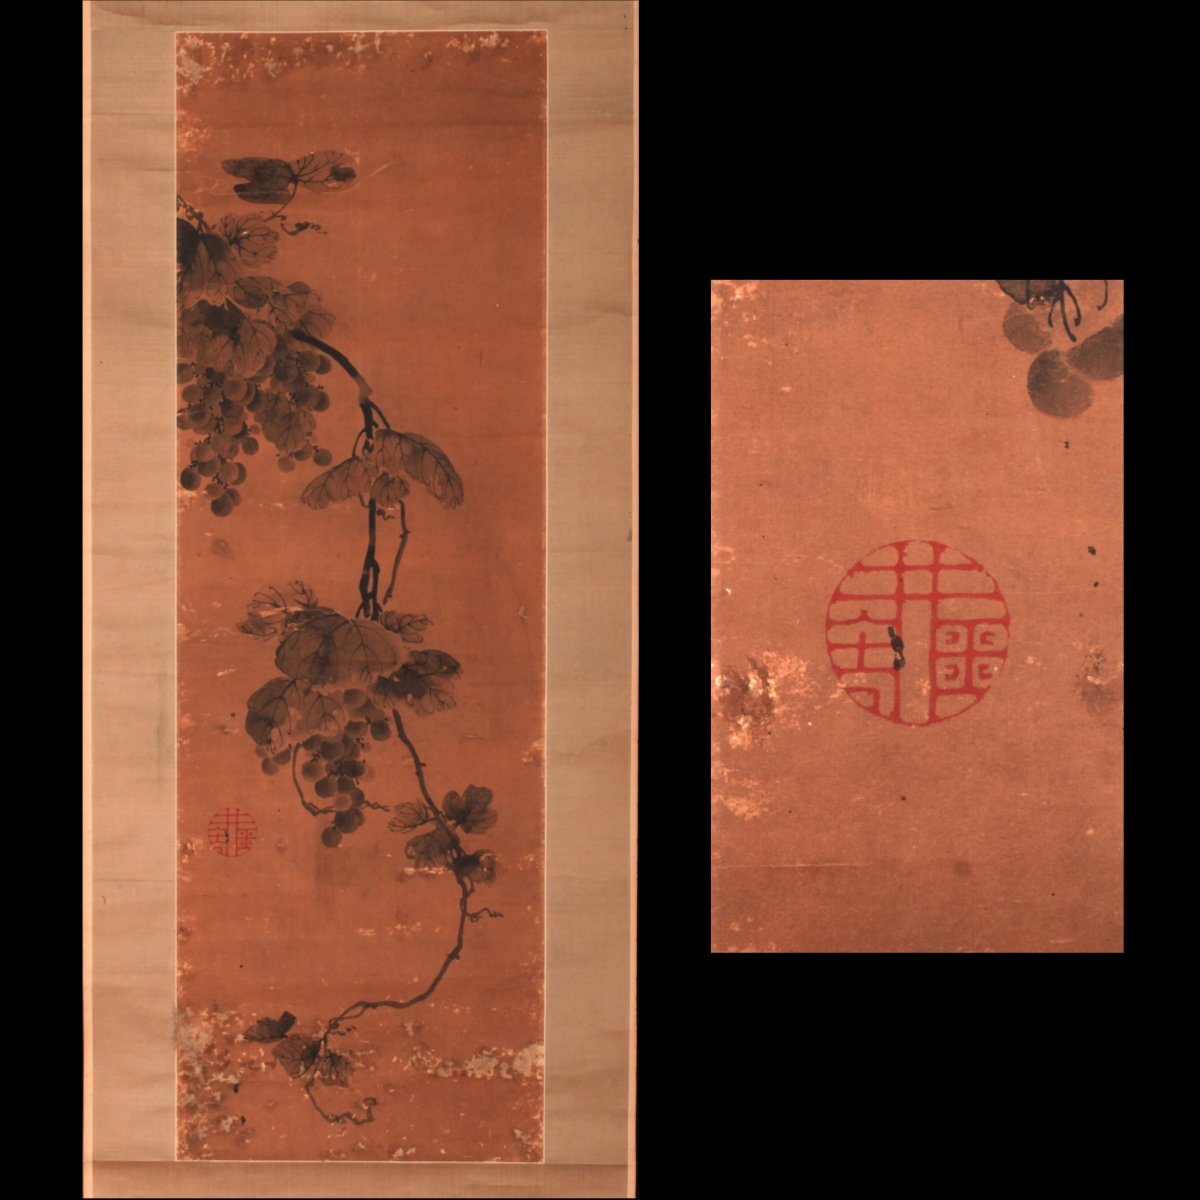 [Musumekura] [Kopie] Ri Dynasty Ink Grapes Yi Dynasty Korea Goryeo Folk Painting Taschenbuch, Malerei, Japanische Malerei, Landschaft, Fugetsu